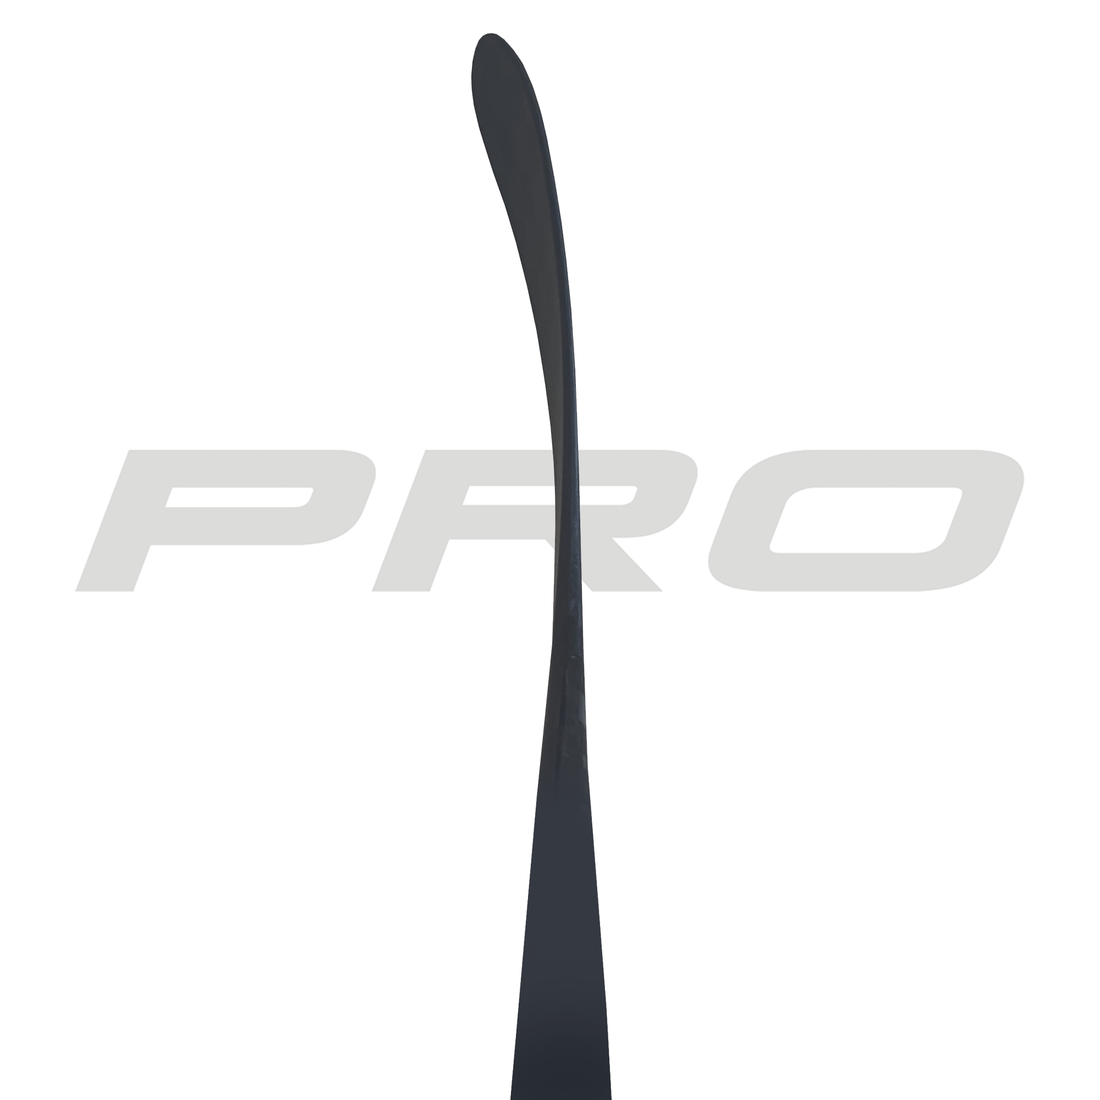 PRO98 (ST: Puljujarvi Pro) - Third Line (425 G) - Pro Stock Hockey Stick - Right